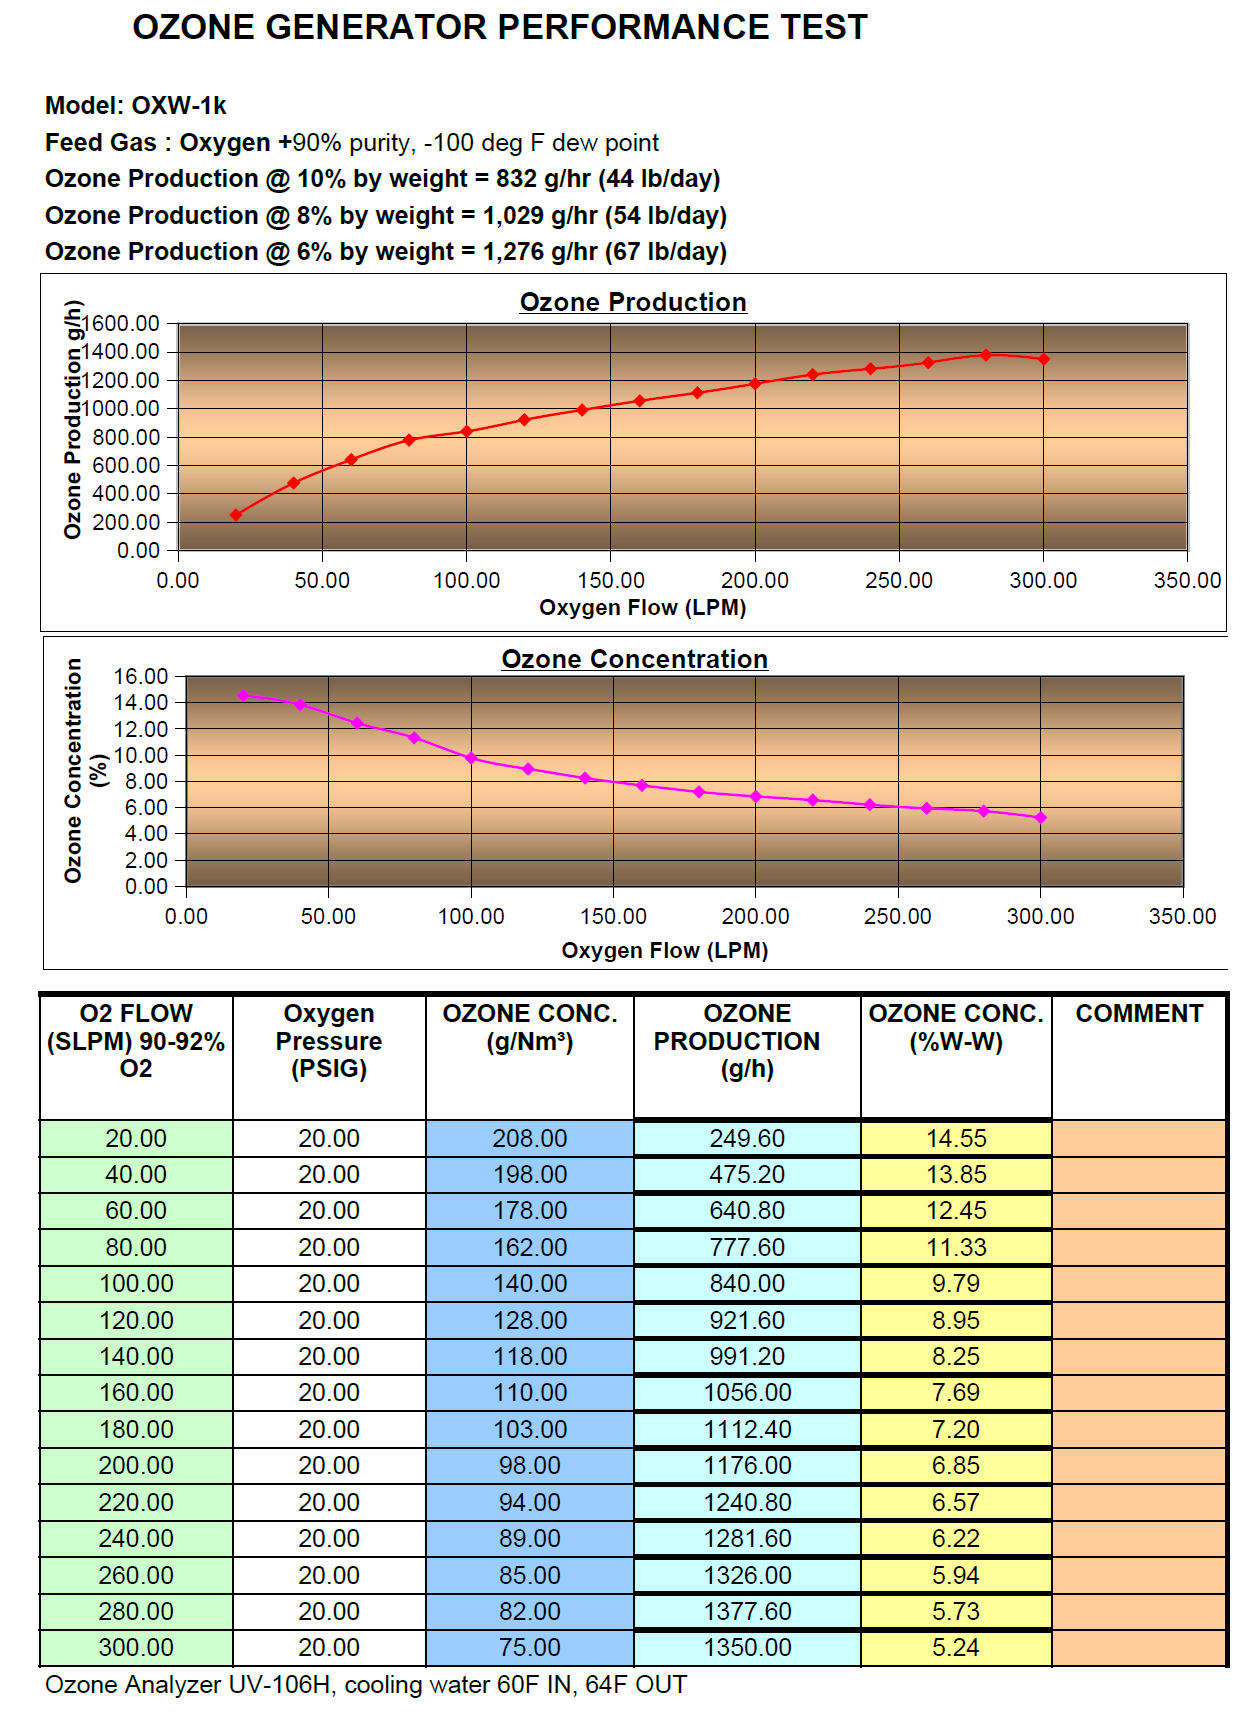 OXW-1k Ozone generator output chart